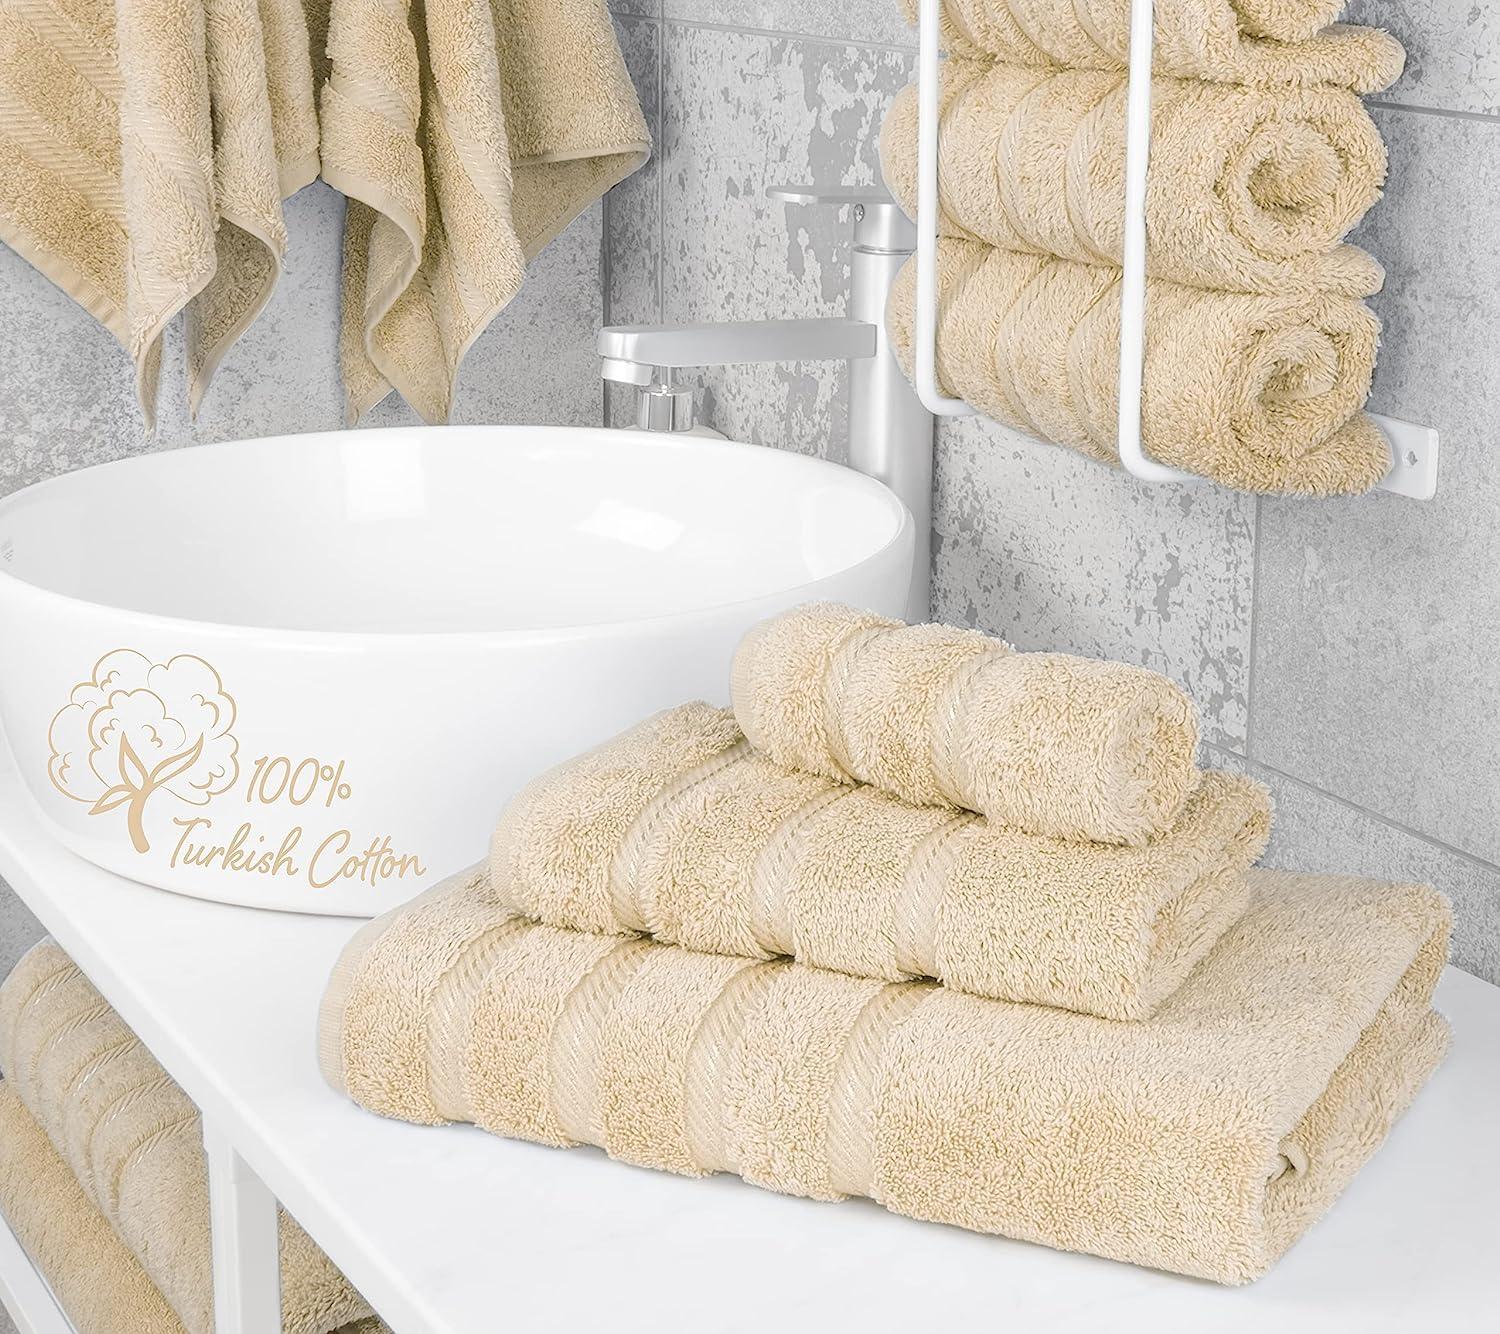 American Soft Linen Bath Towel Set, 4 Piece 100% Turkish Cotton